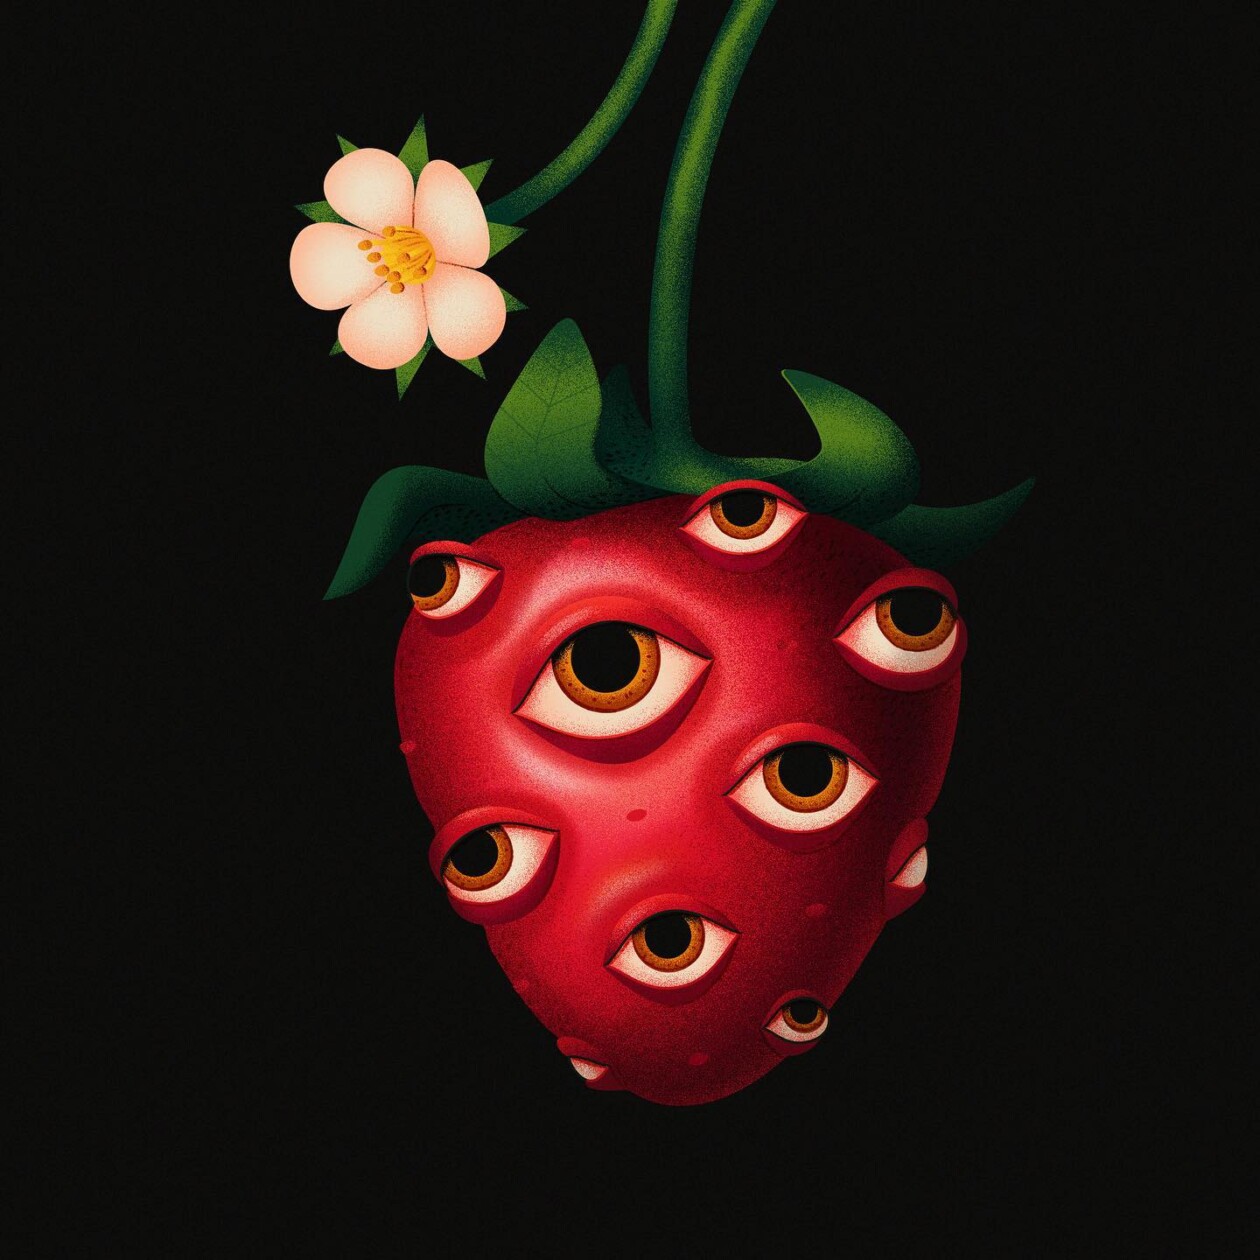 Marvelous Surrealistic Illustrations Of Eyes Peering From Plants And Animals By Ana Miminoshvili (6)